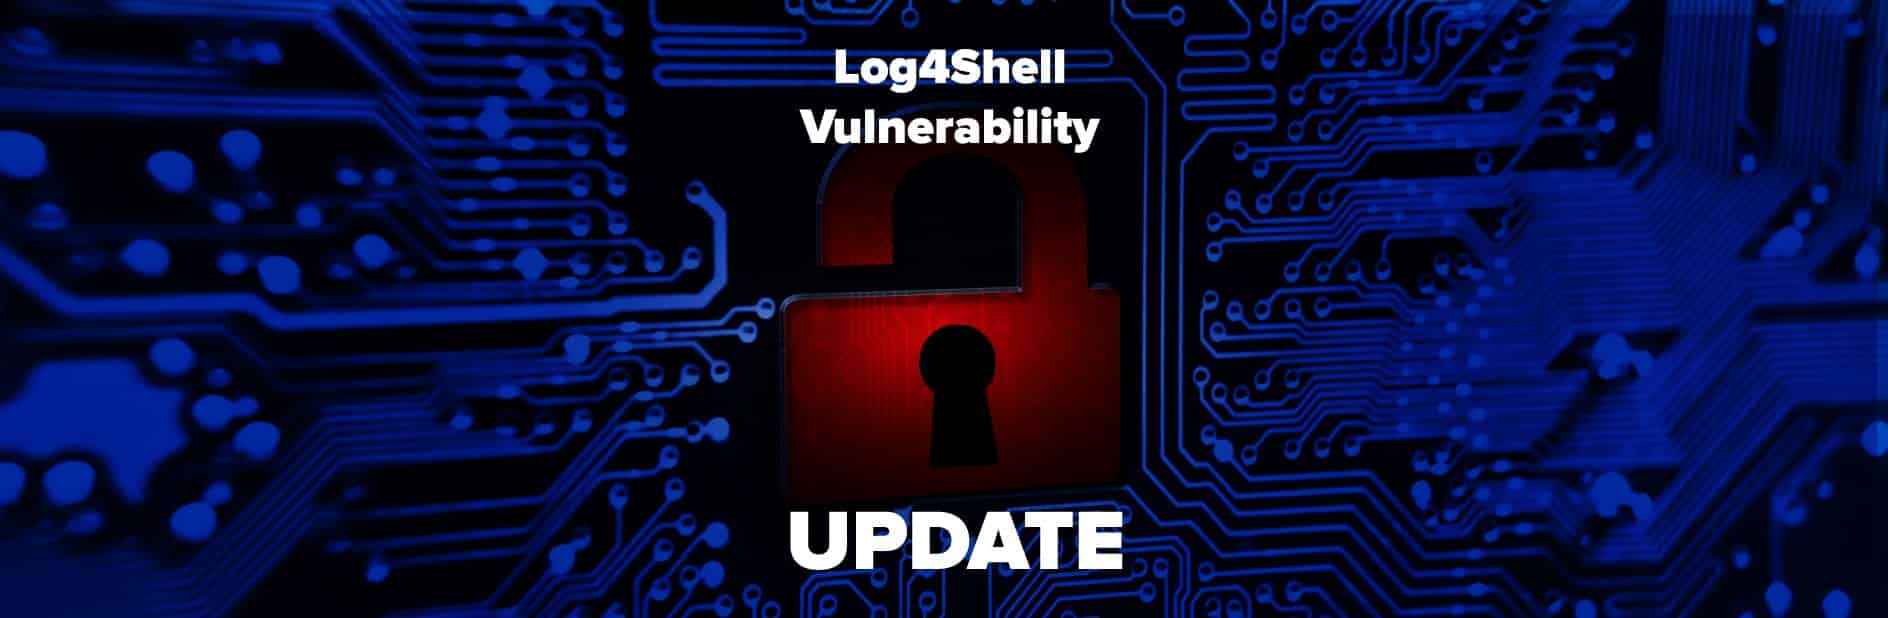 Log4Shell Vulnerability Update - December 13, 2021